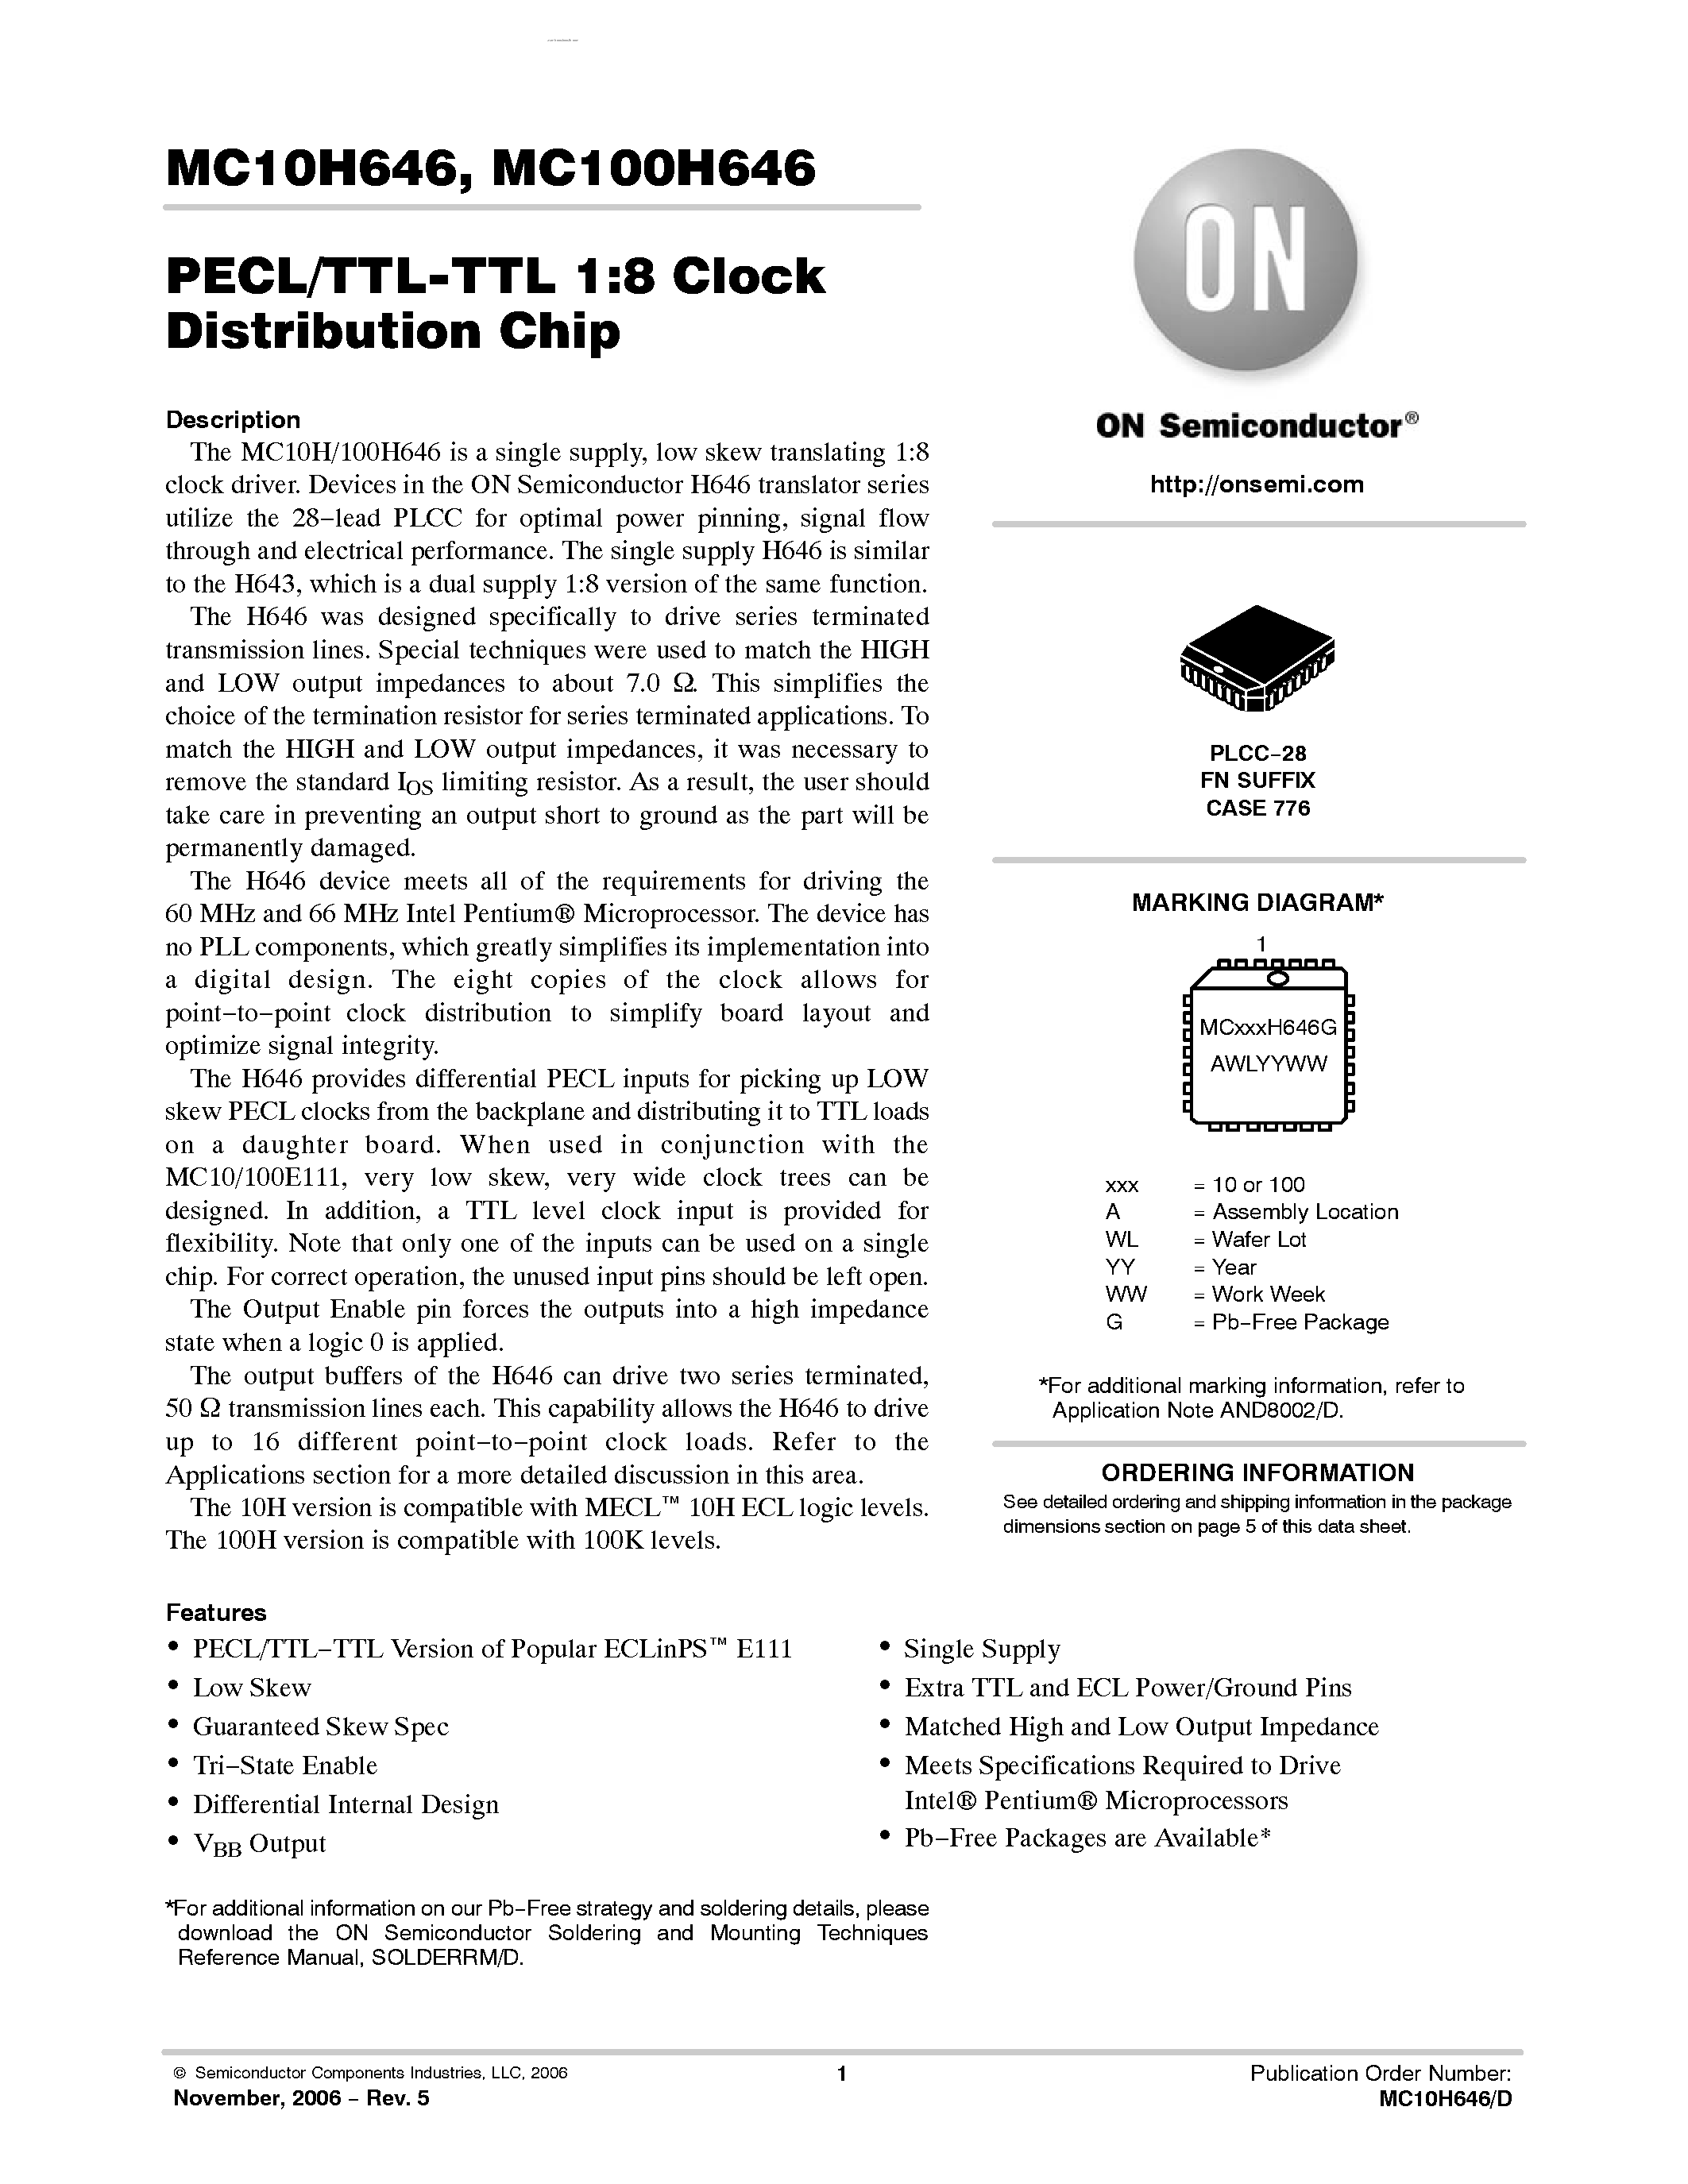 Datasheet MC10H646 - PENTIUM MICROPROCESSOR PECL/TTL-TTL CLOCK DRIVER page 1